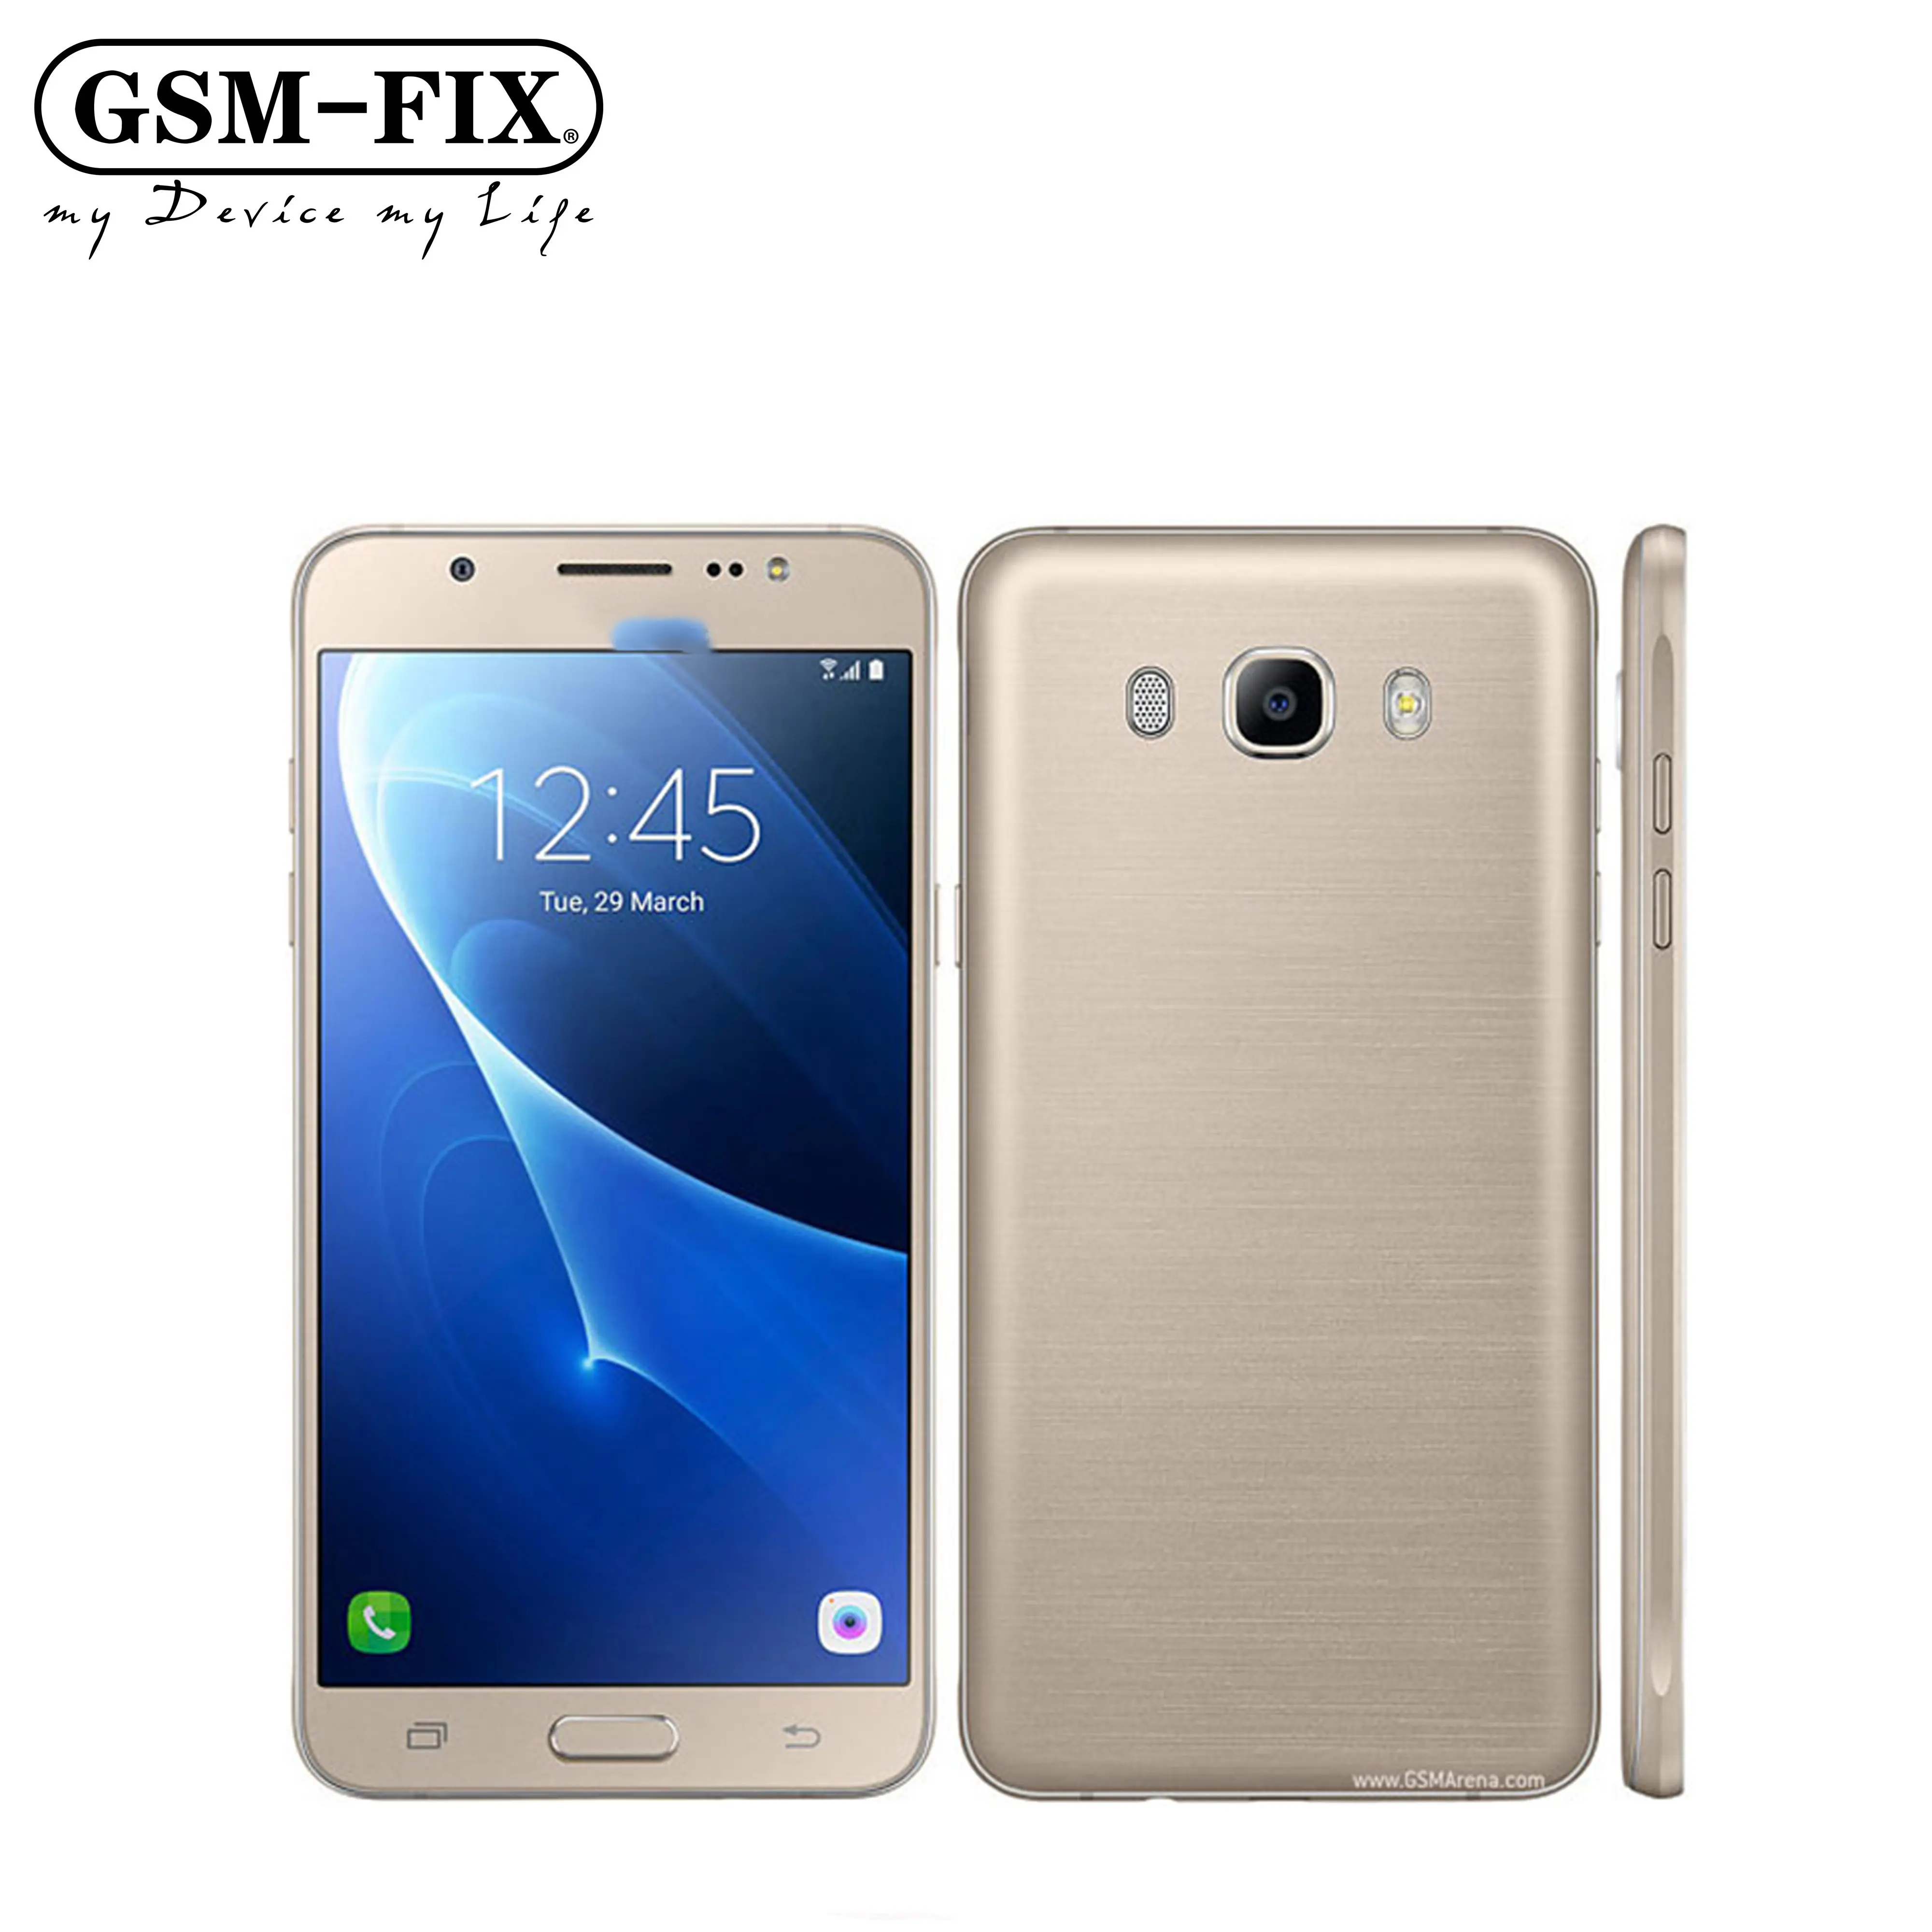 GSM-FIX-teléfono móvil 4G, pantalla de 5,5 pulgadas, J710F, 2GB + 16GB, Tarjeta SIM Dual, cuatro núcleos, Android, LTE, para Samsung Galaxy J7 2016